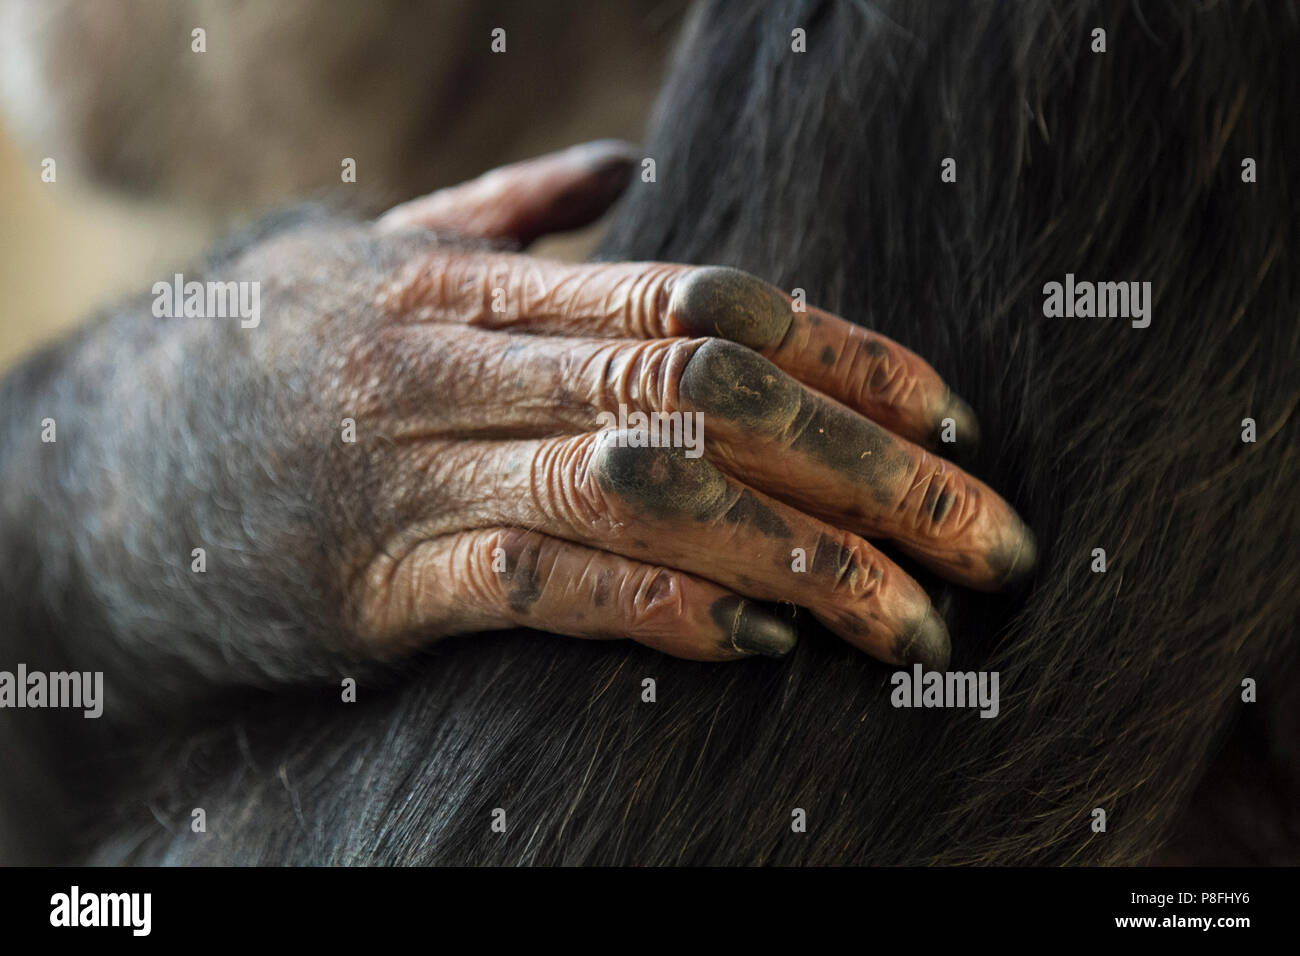 Chimpanzee hands close up Stock Photo